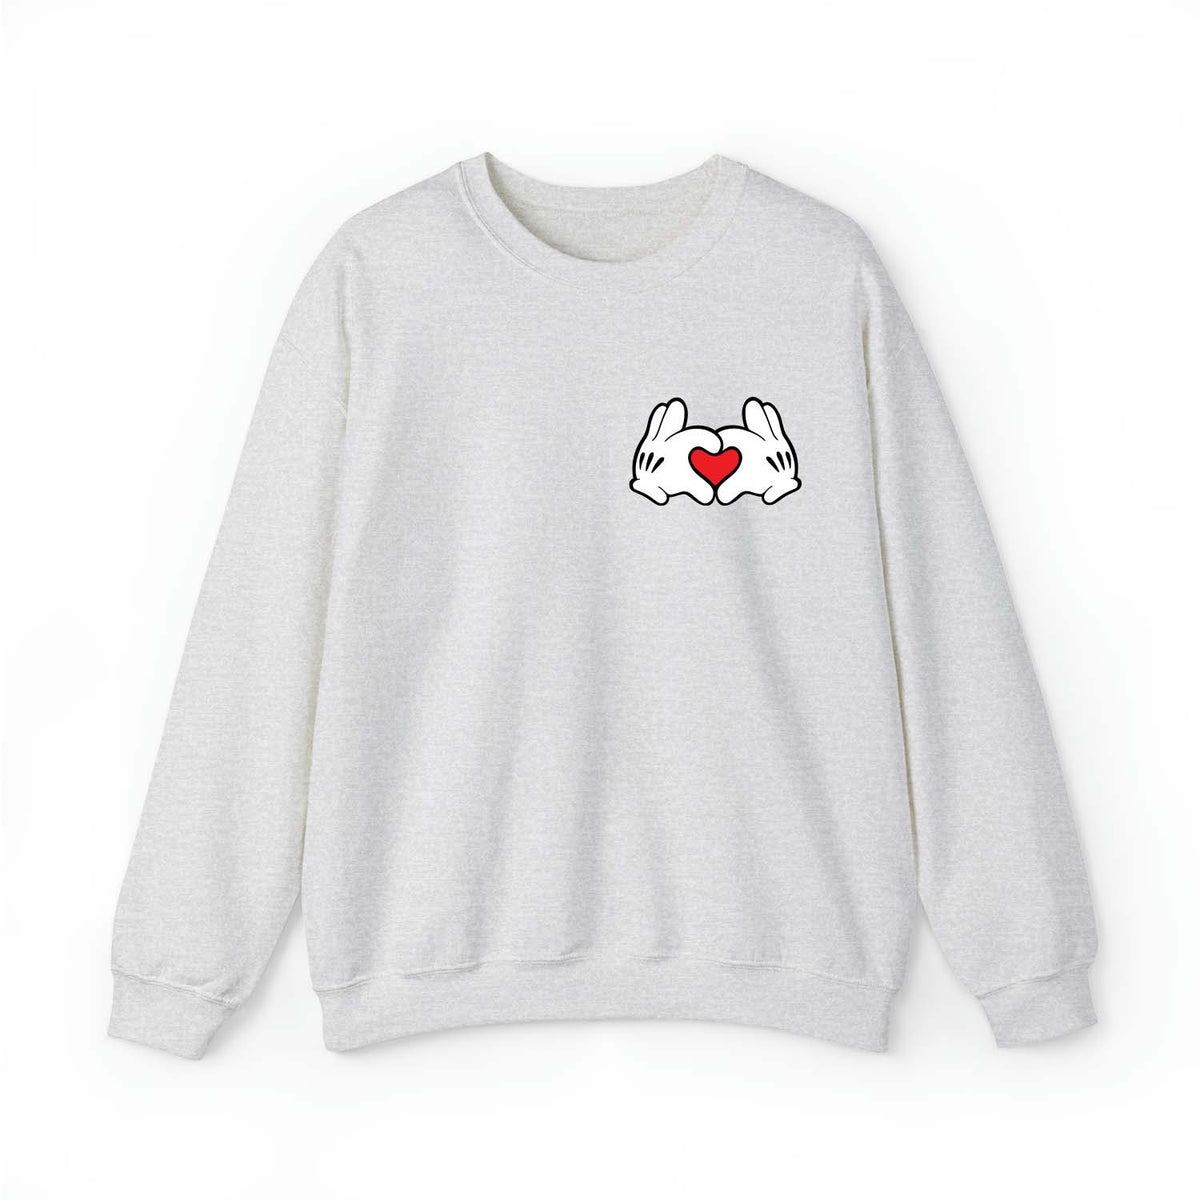 gray-sweatshirt-with-pocket-size-mickey-sign-heart